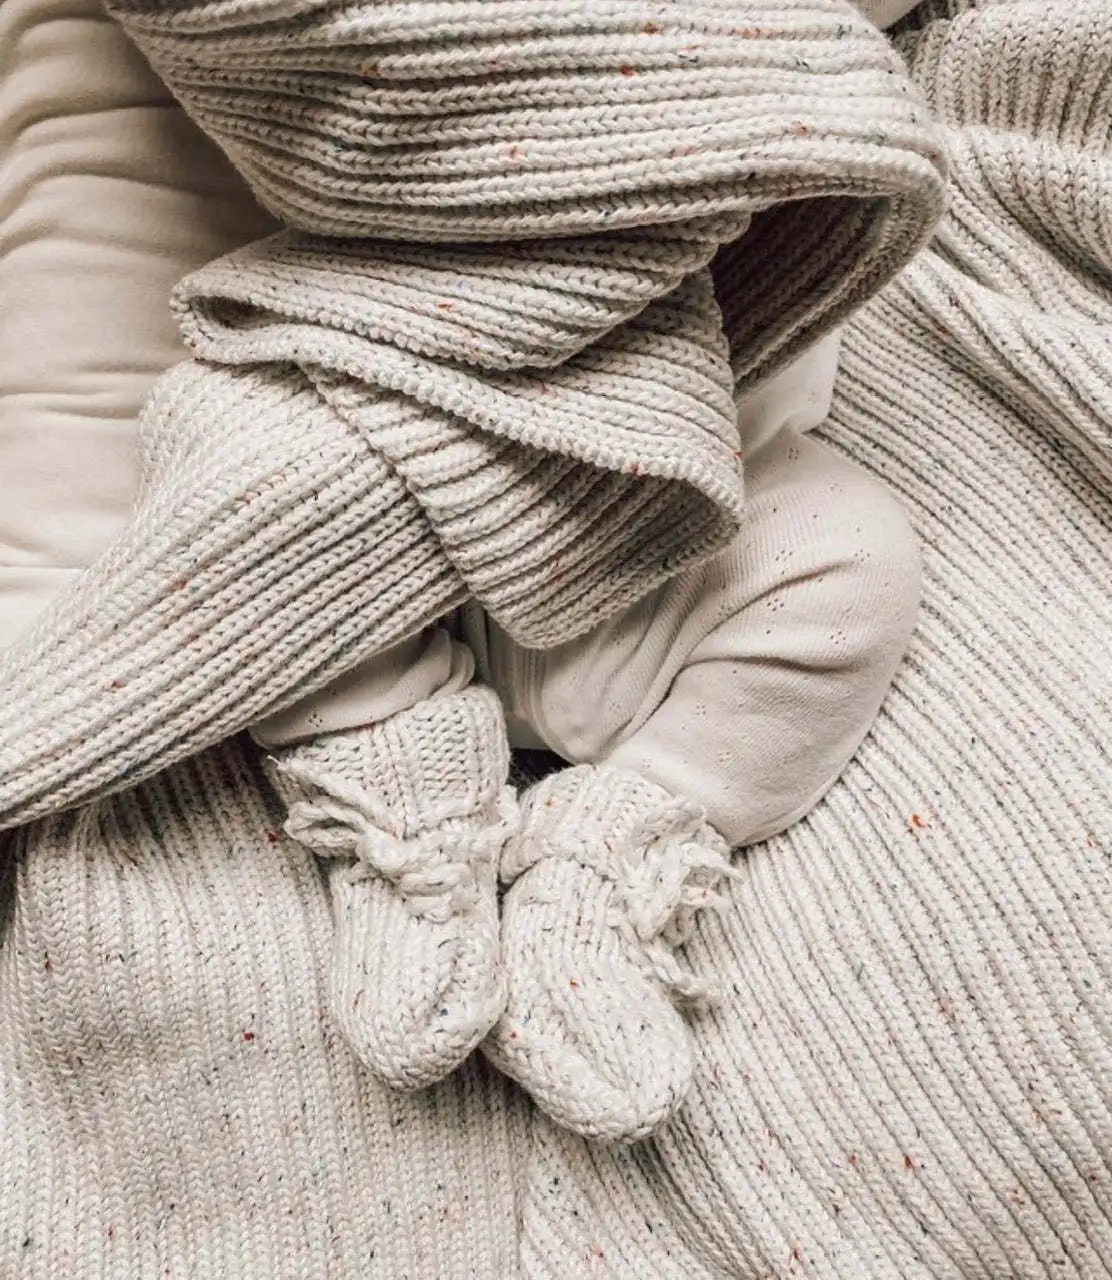 Knitted Baby Receiving Blanket Cotton Stroller and Nap Time Toddler Blanket Nursery Swaddling Blankets for Crib Stroller